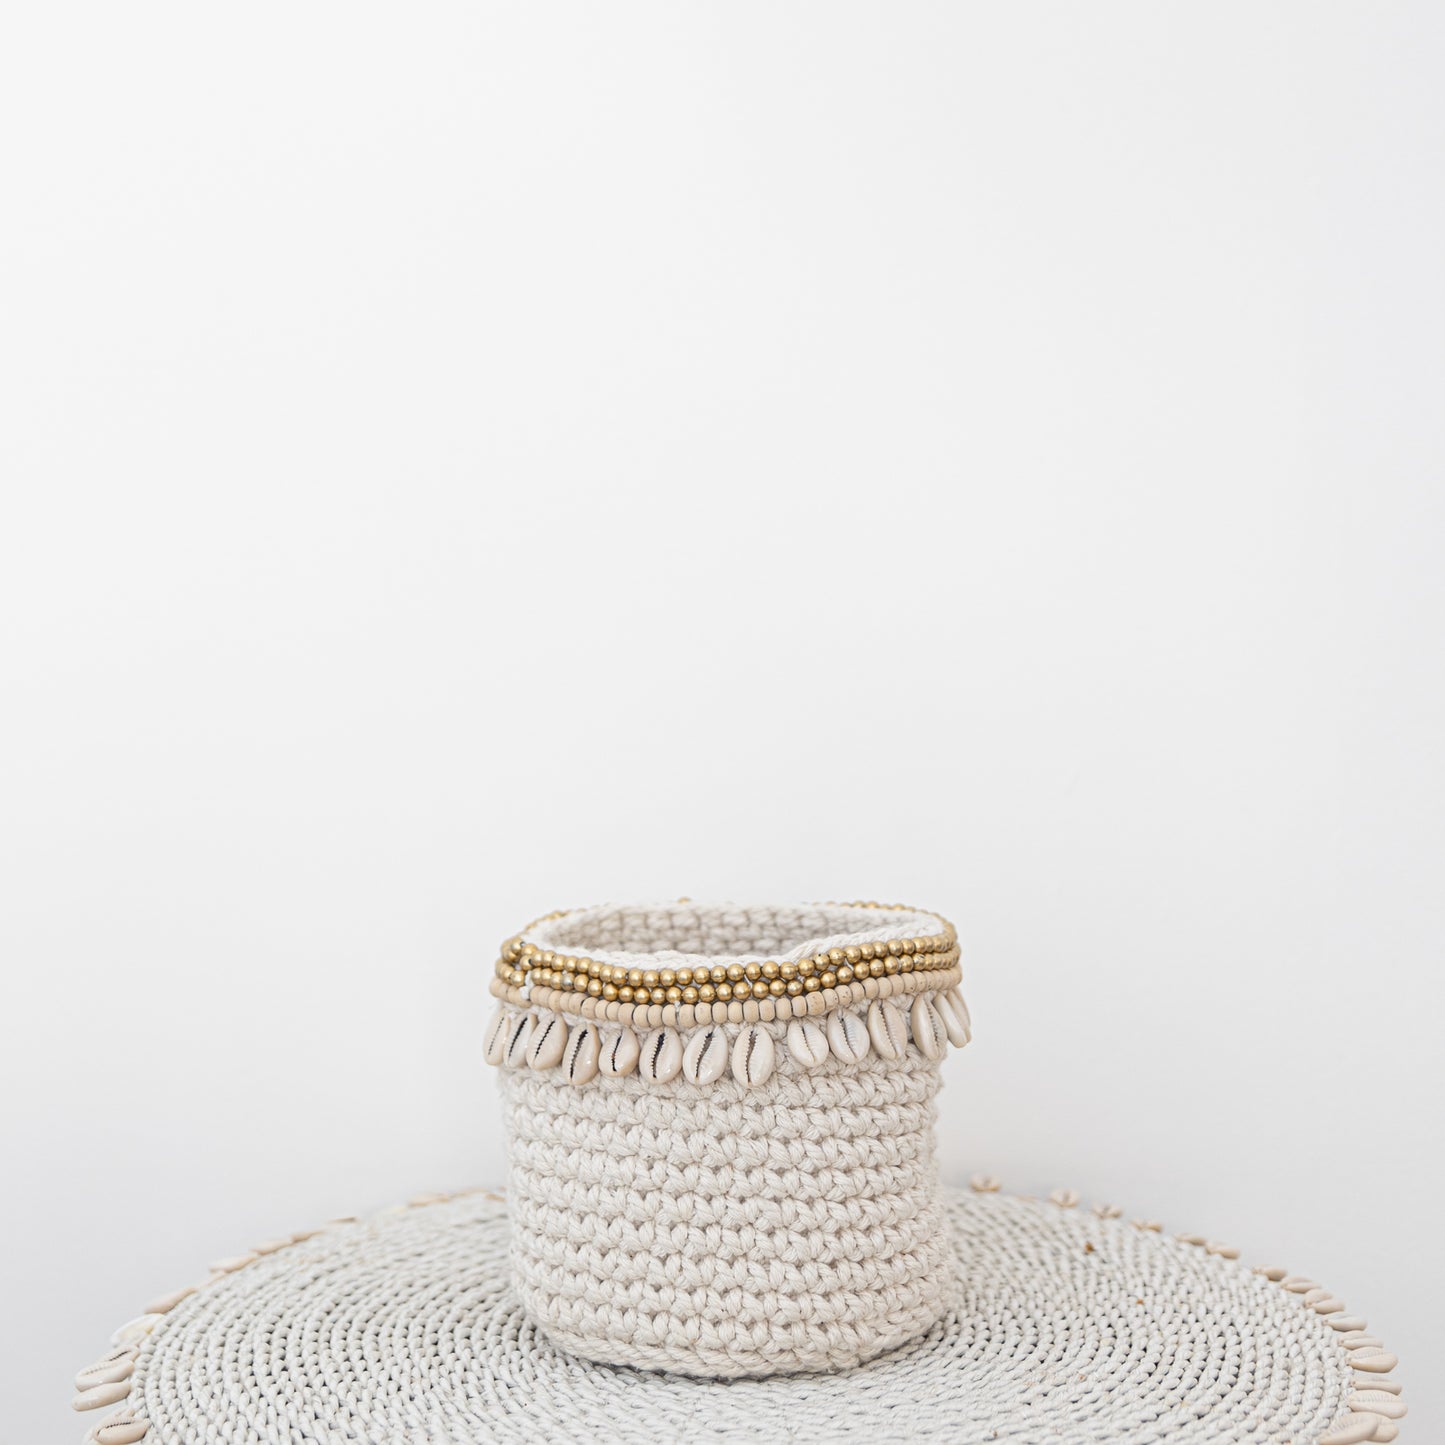 Macrame knitted pot